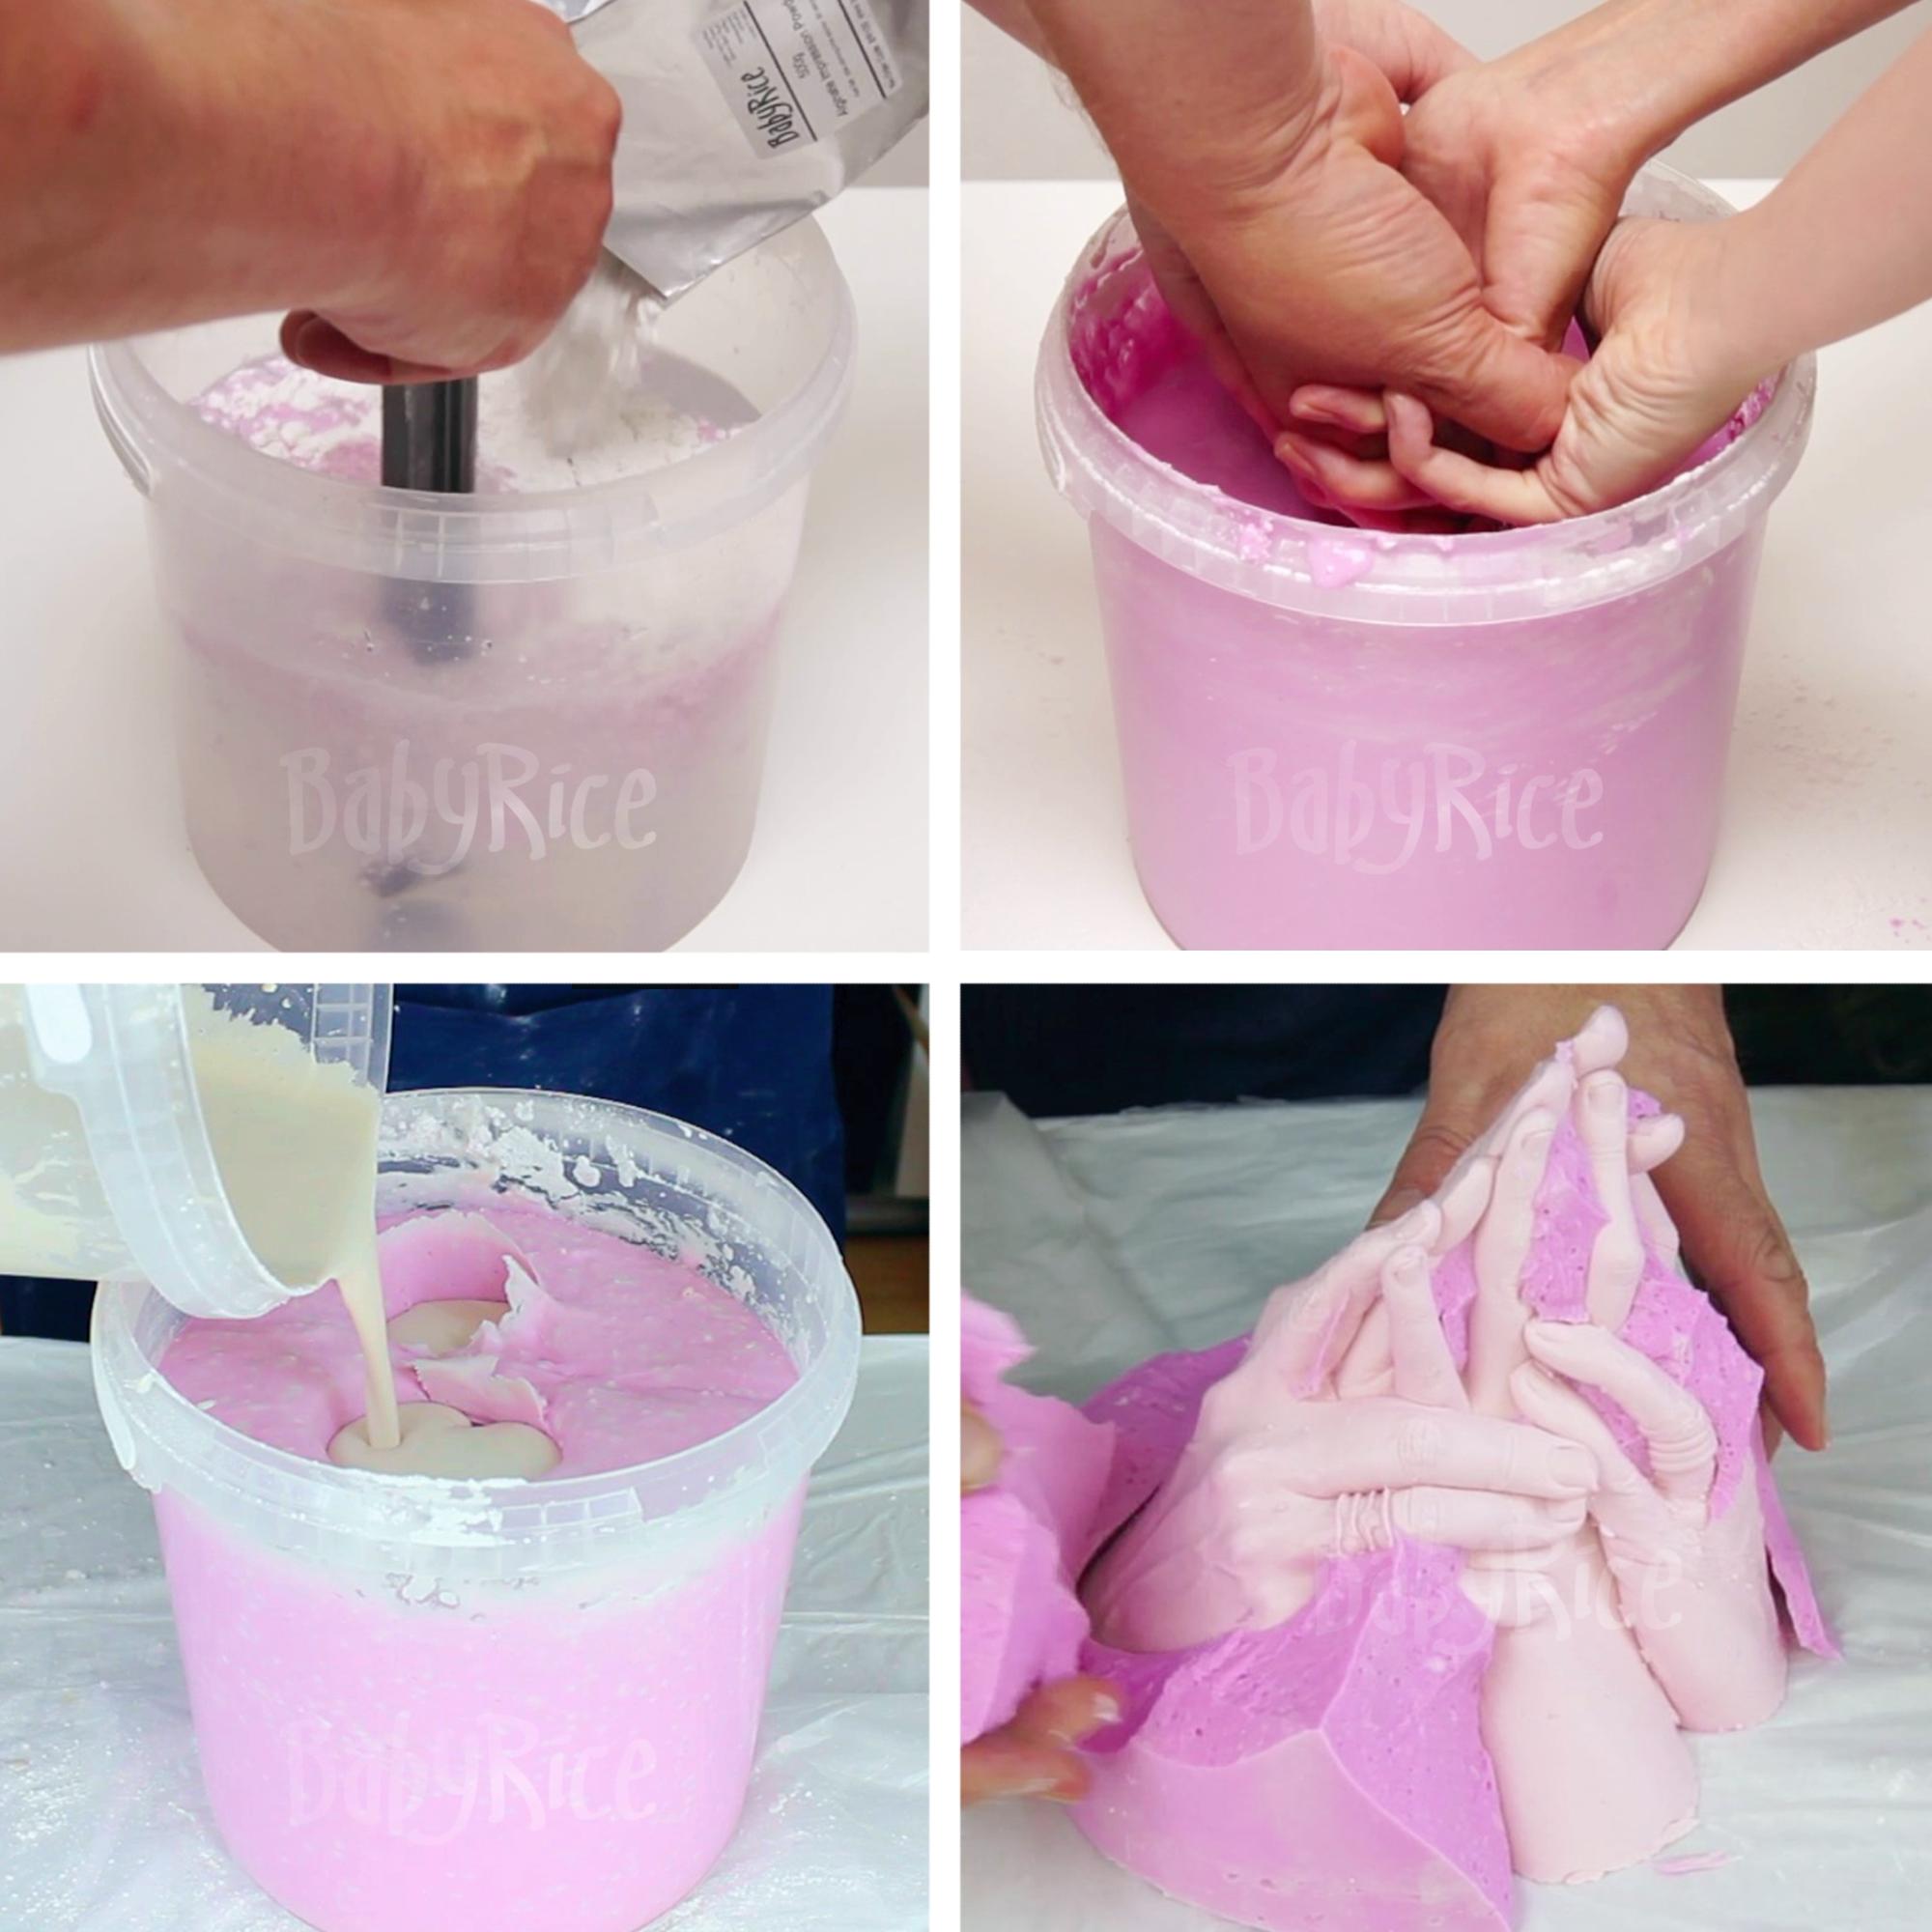 How to make a family hand cast